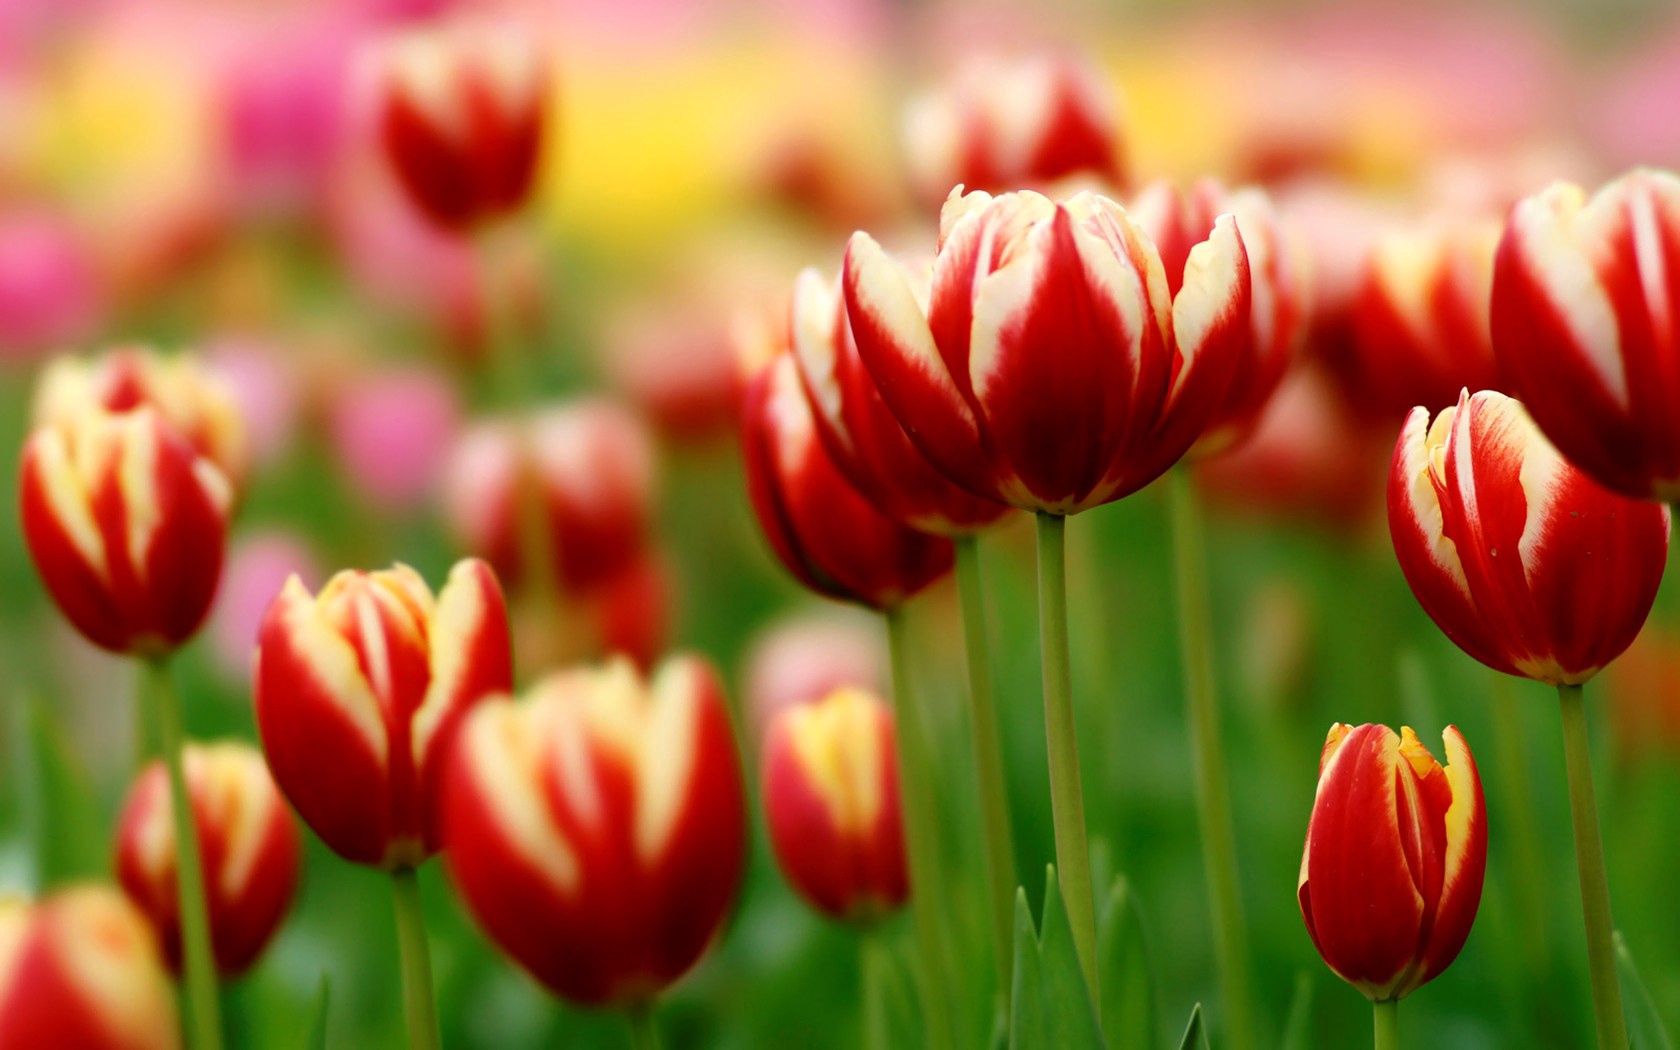 variegated, close up, flowers, tulips, flower bed, flowerbed, mottled